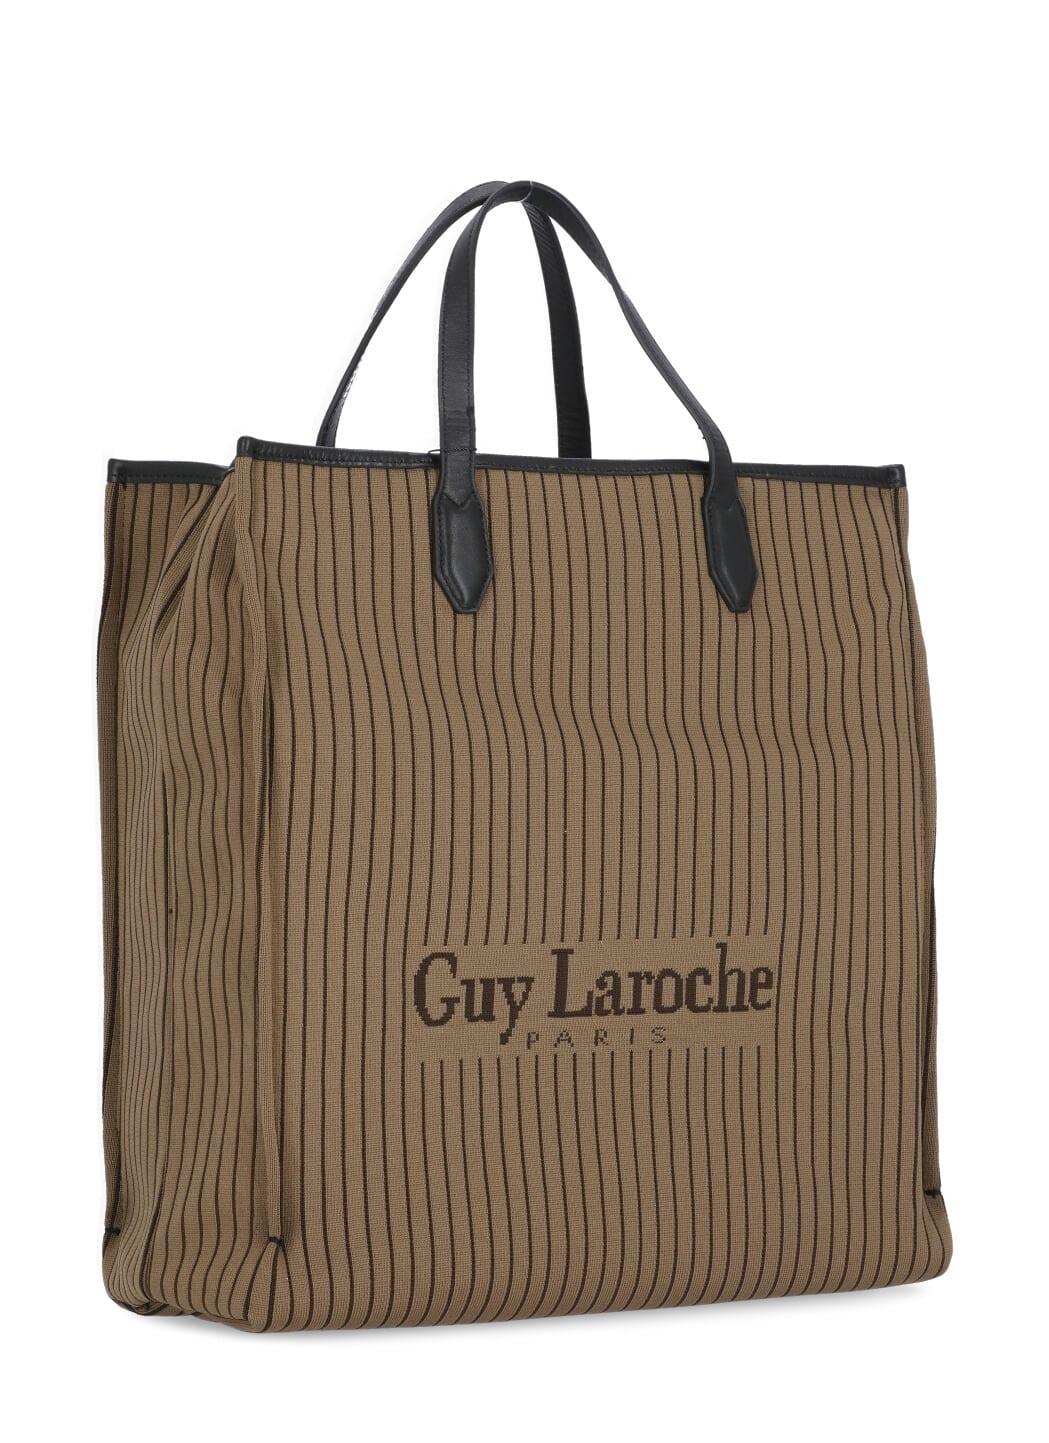 Guy Laroche Logoed Shoulder Bag in Brown